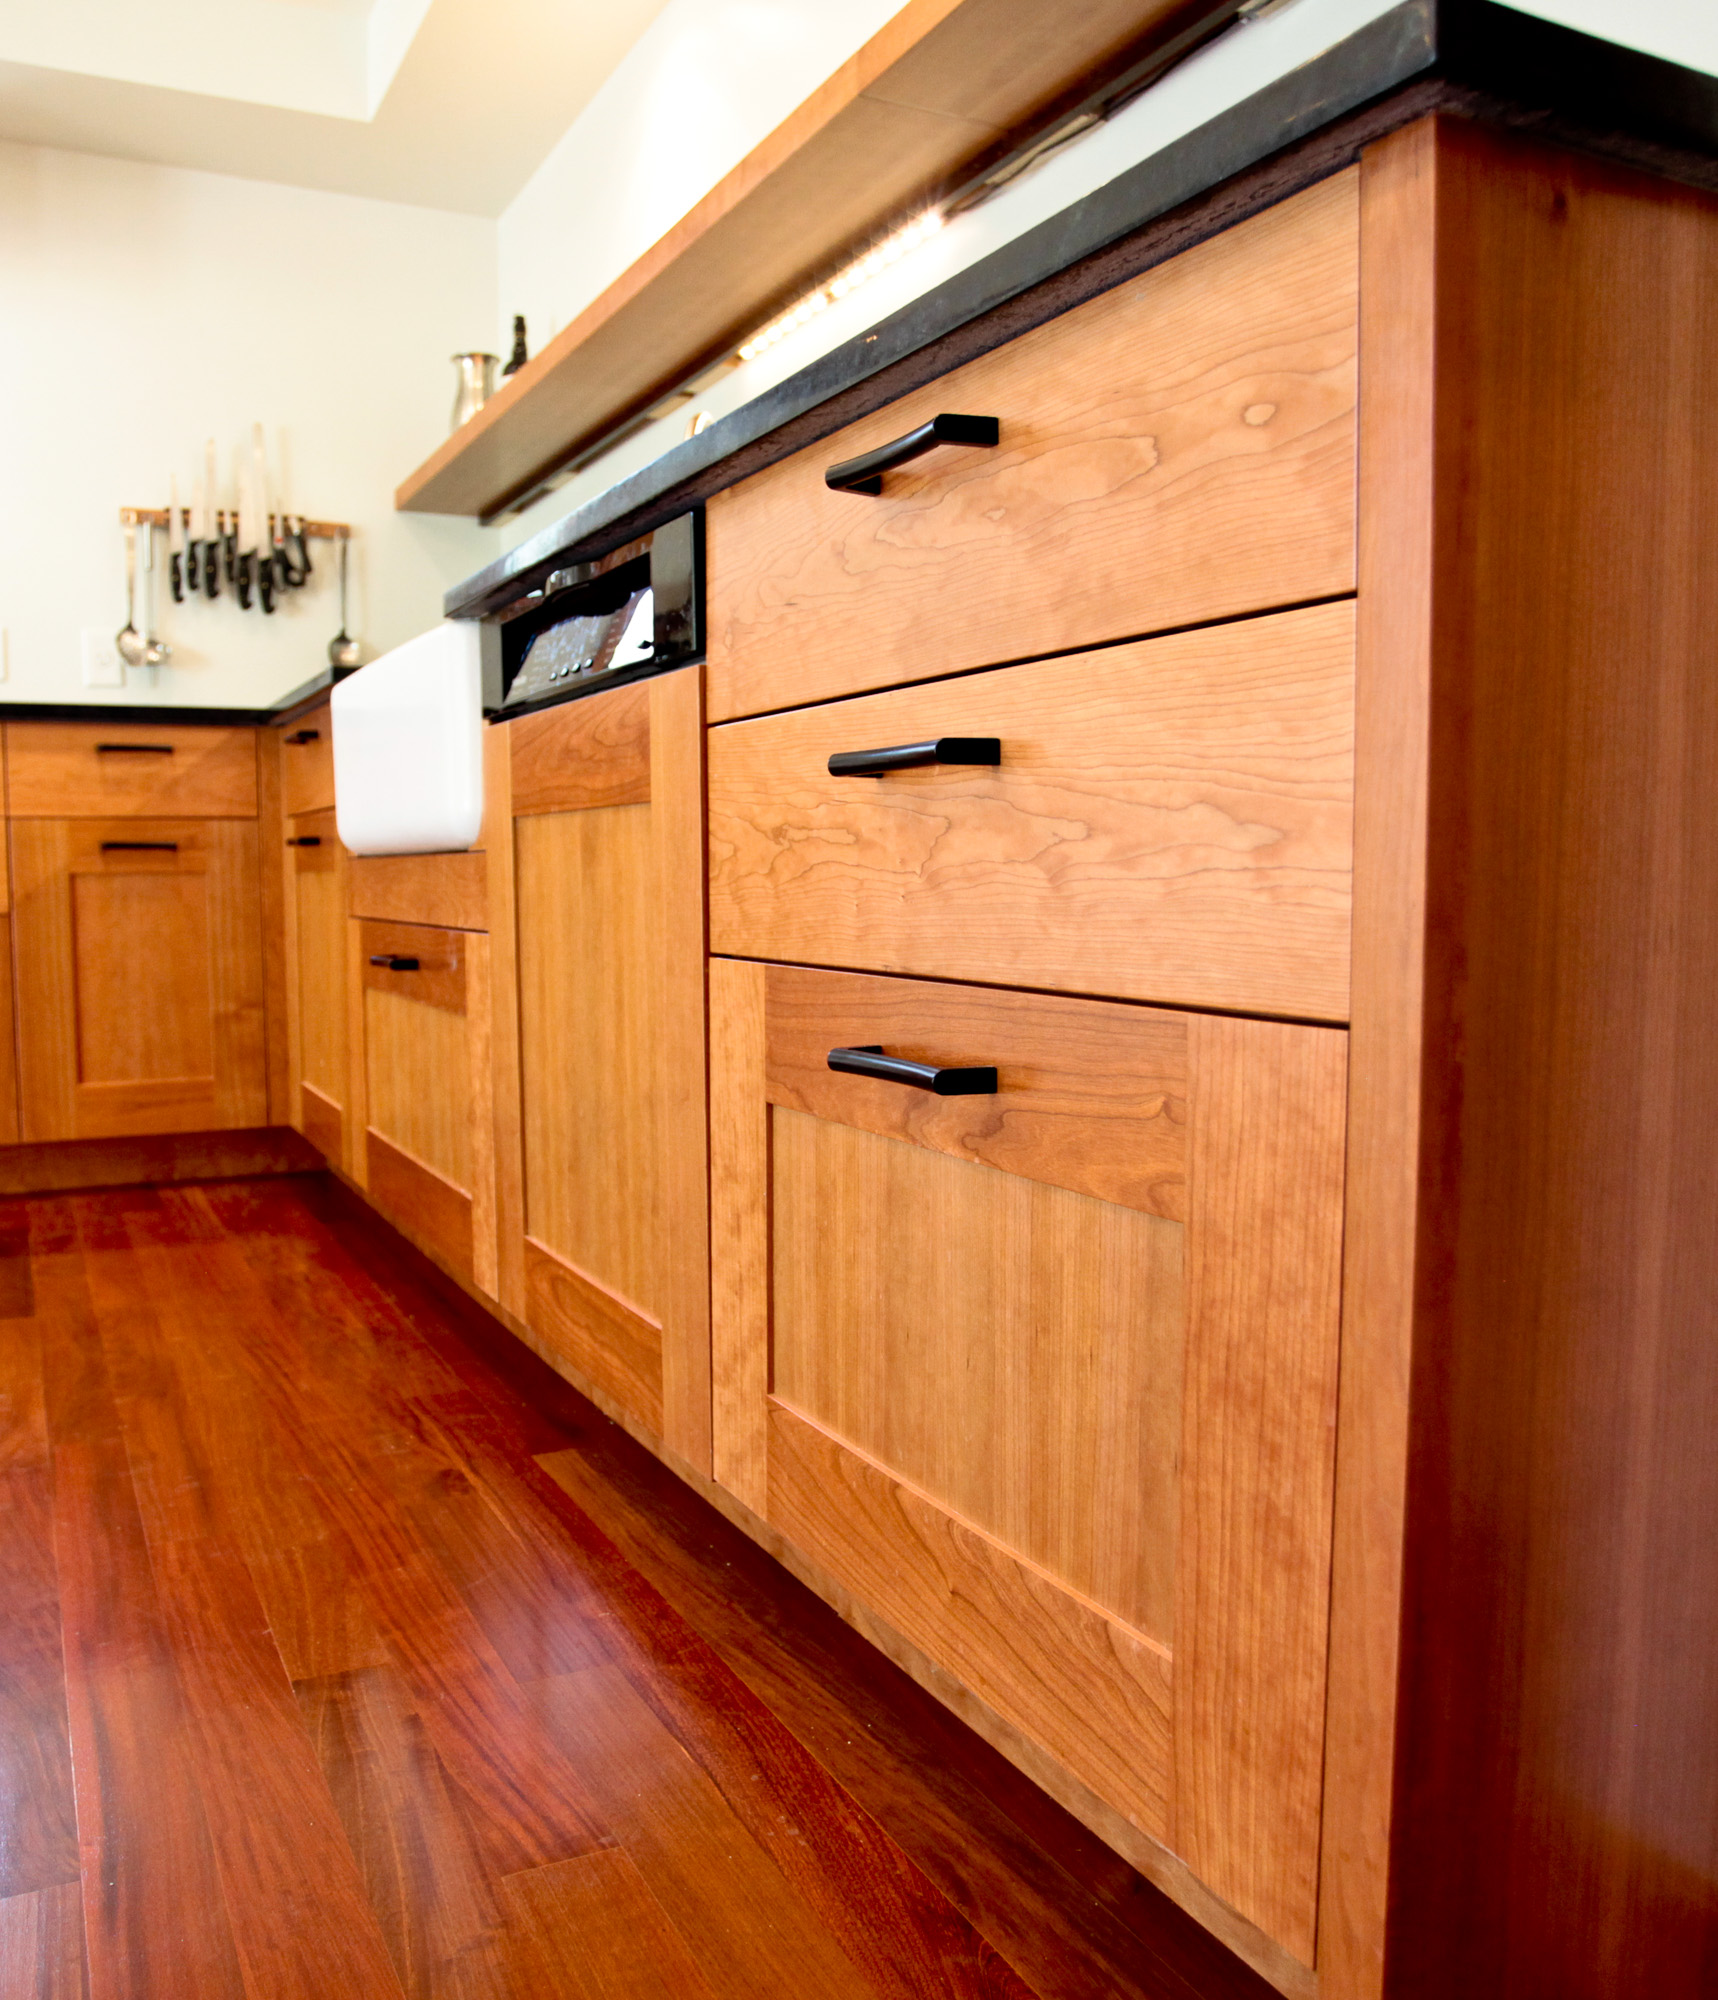 Solid cherry wood kitchen cabinet